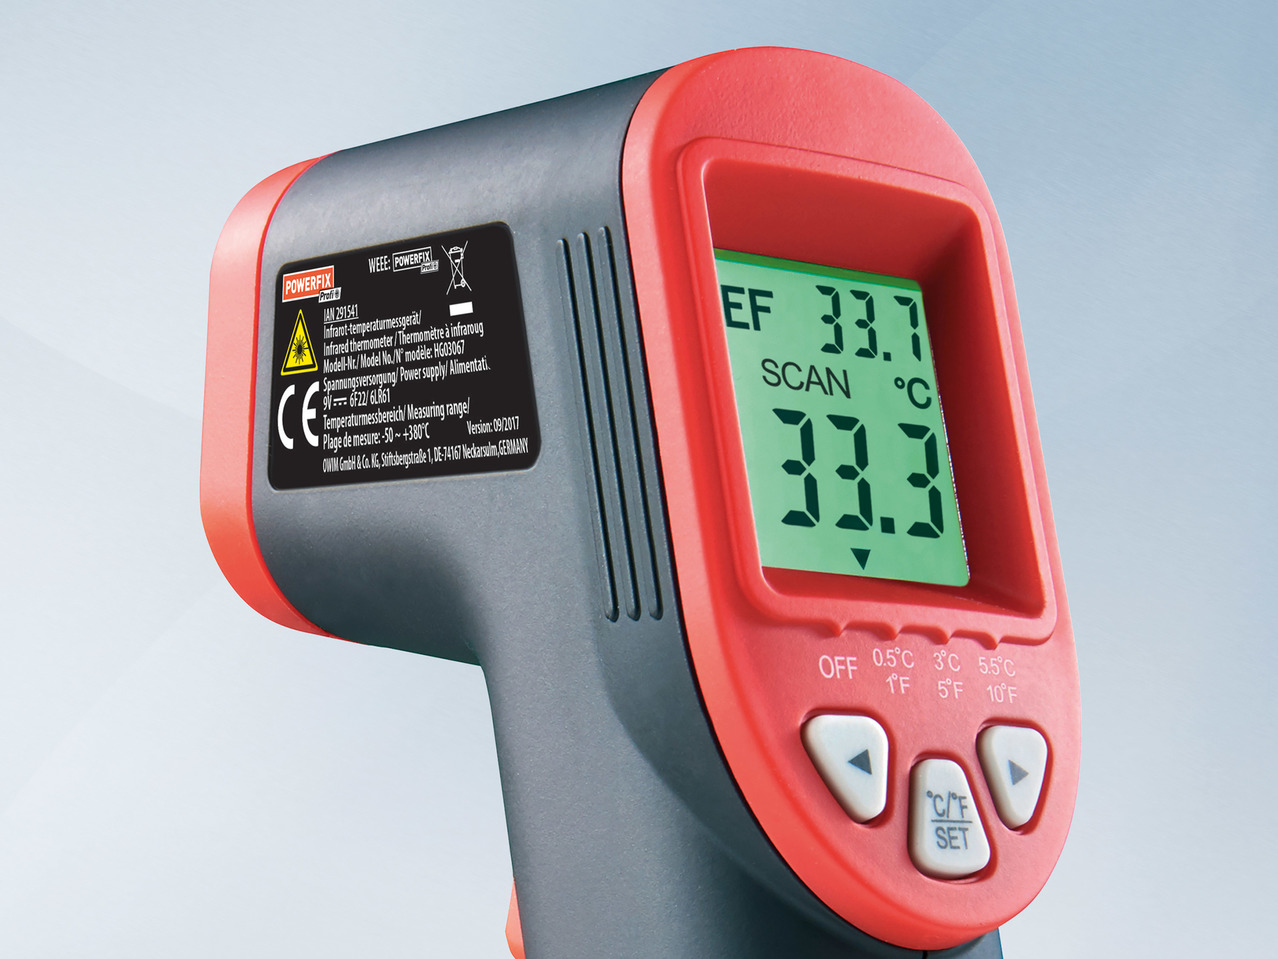 Powerfix Profi Infrared Thermometer1